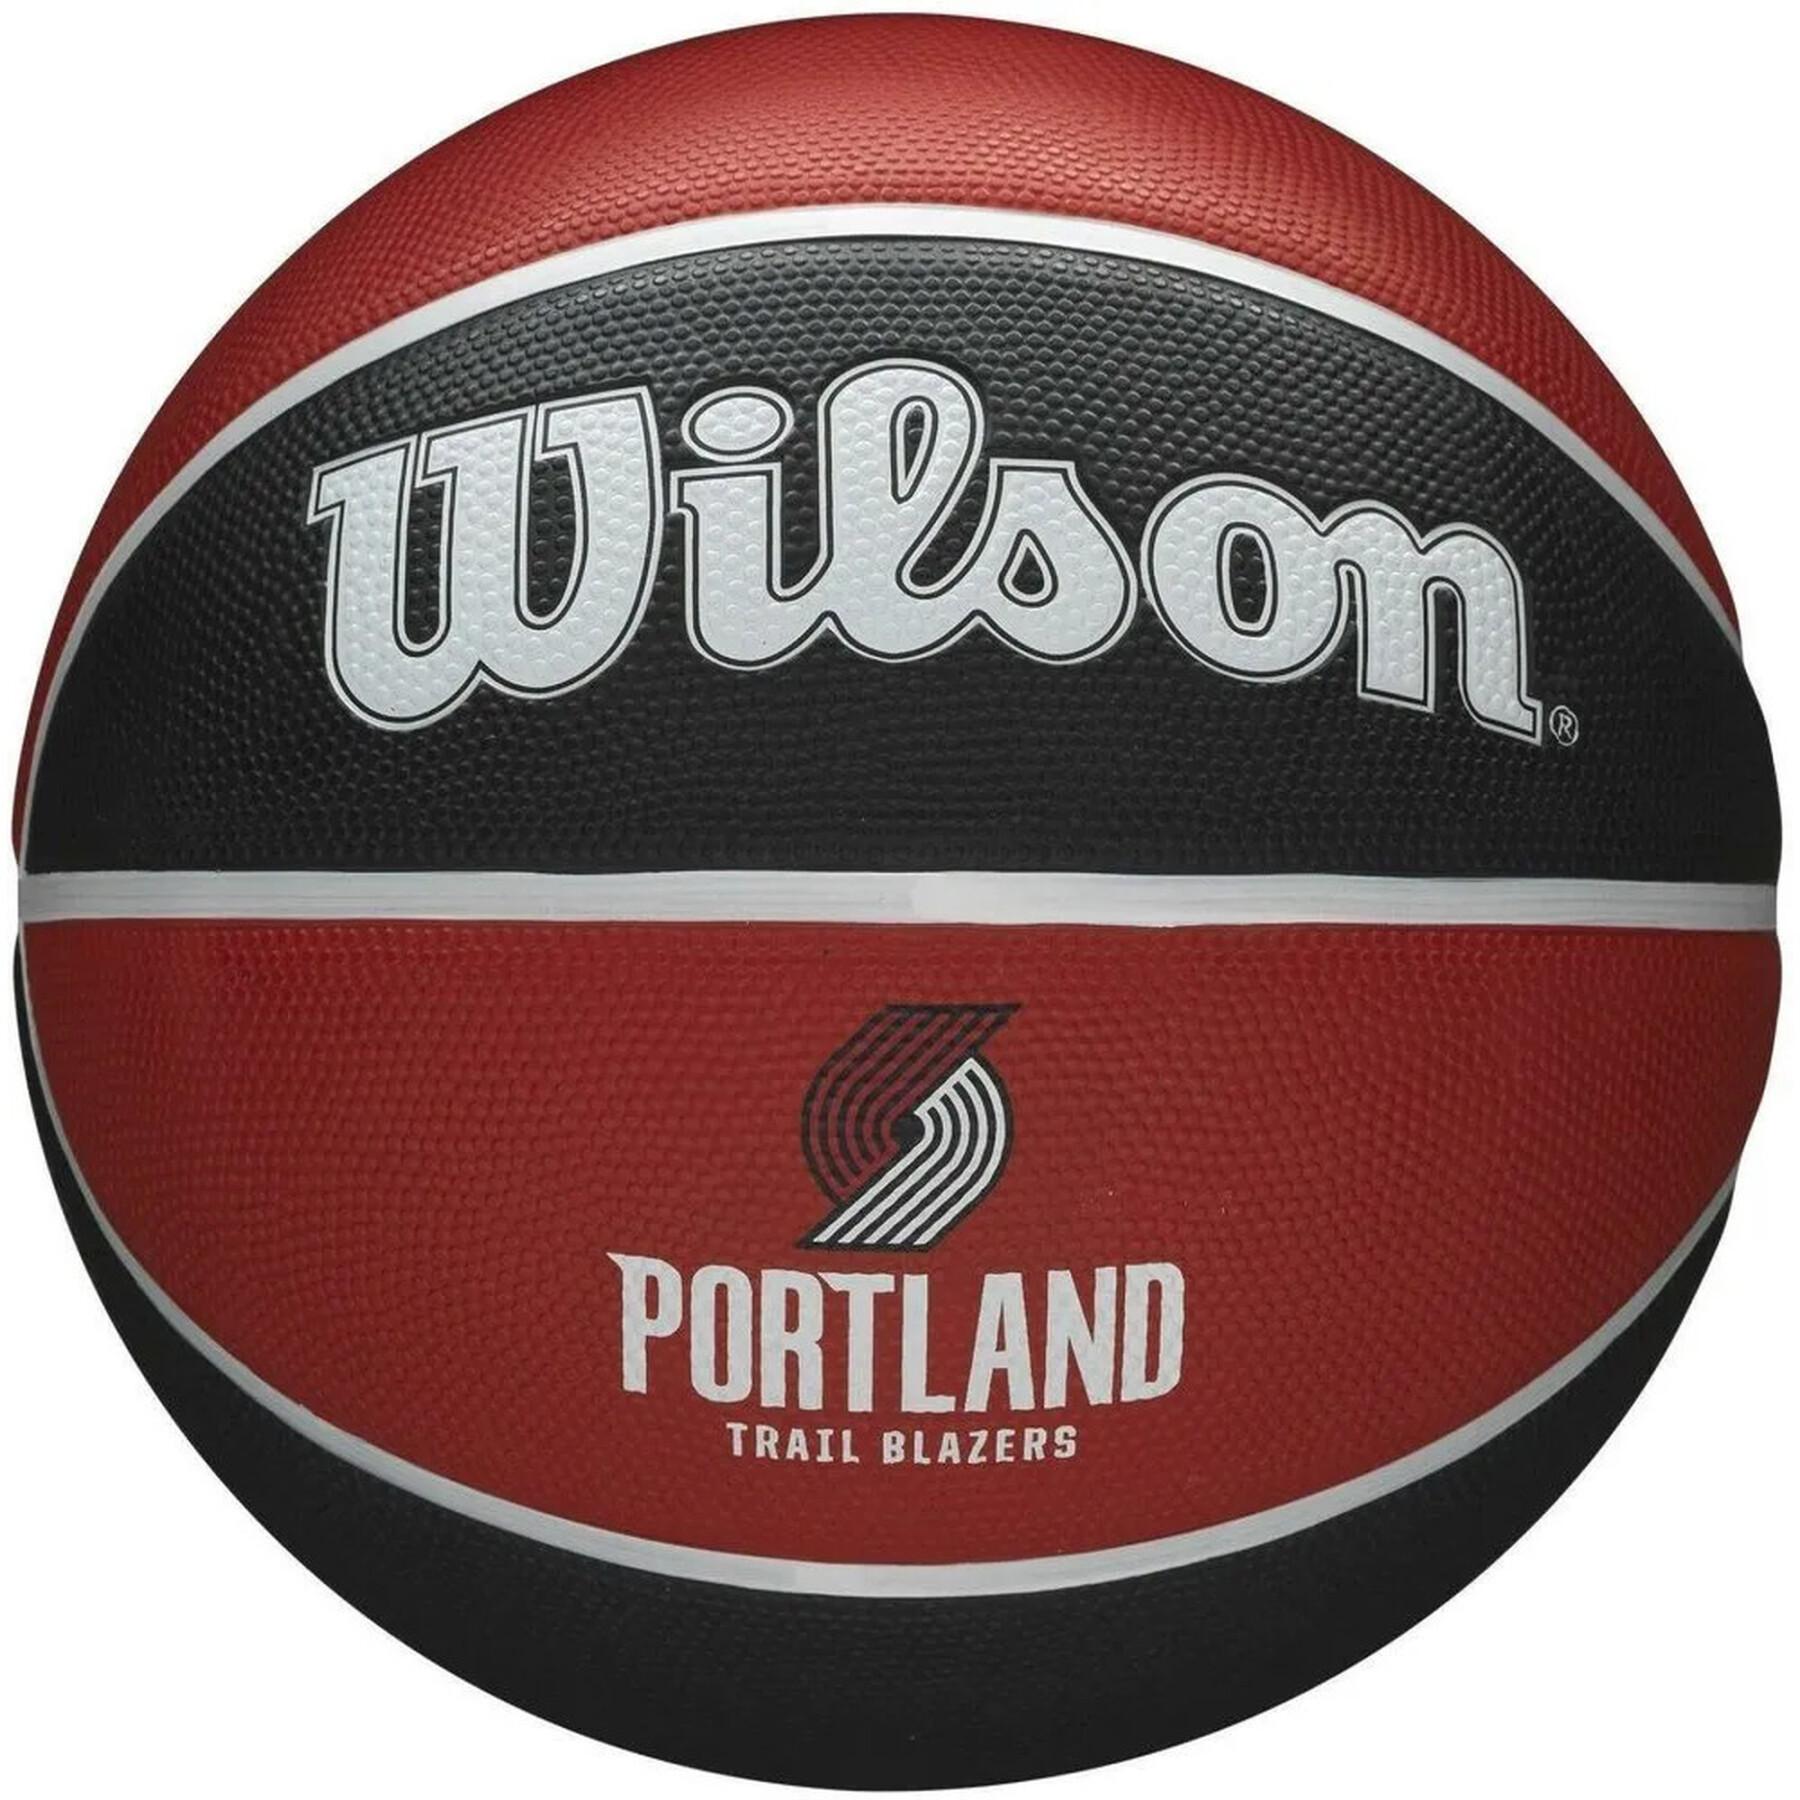 NBA Tribute Ball Portland Trail Blazers